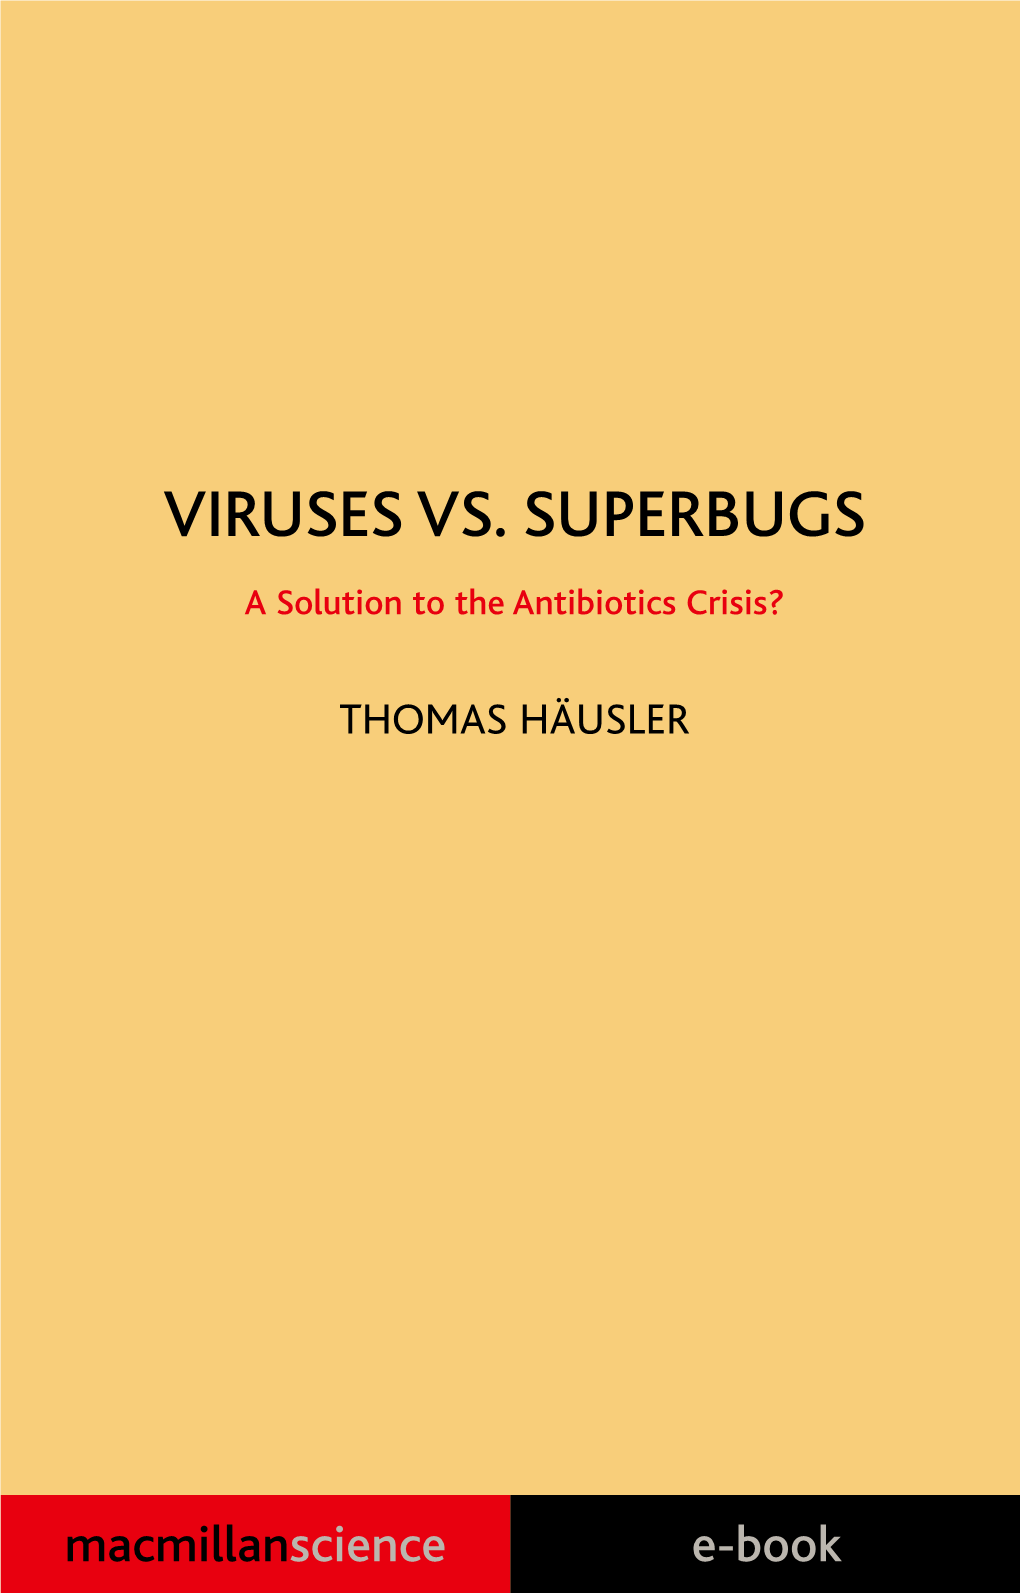 VIRUSES VS. SUPERBUGS a Solution to the Antibiotics Crisis?